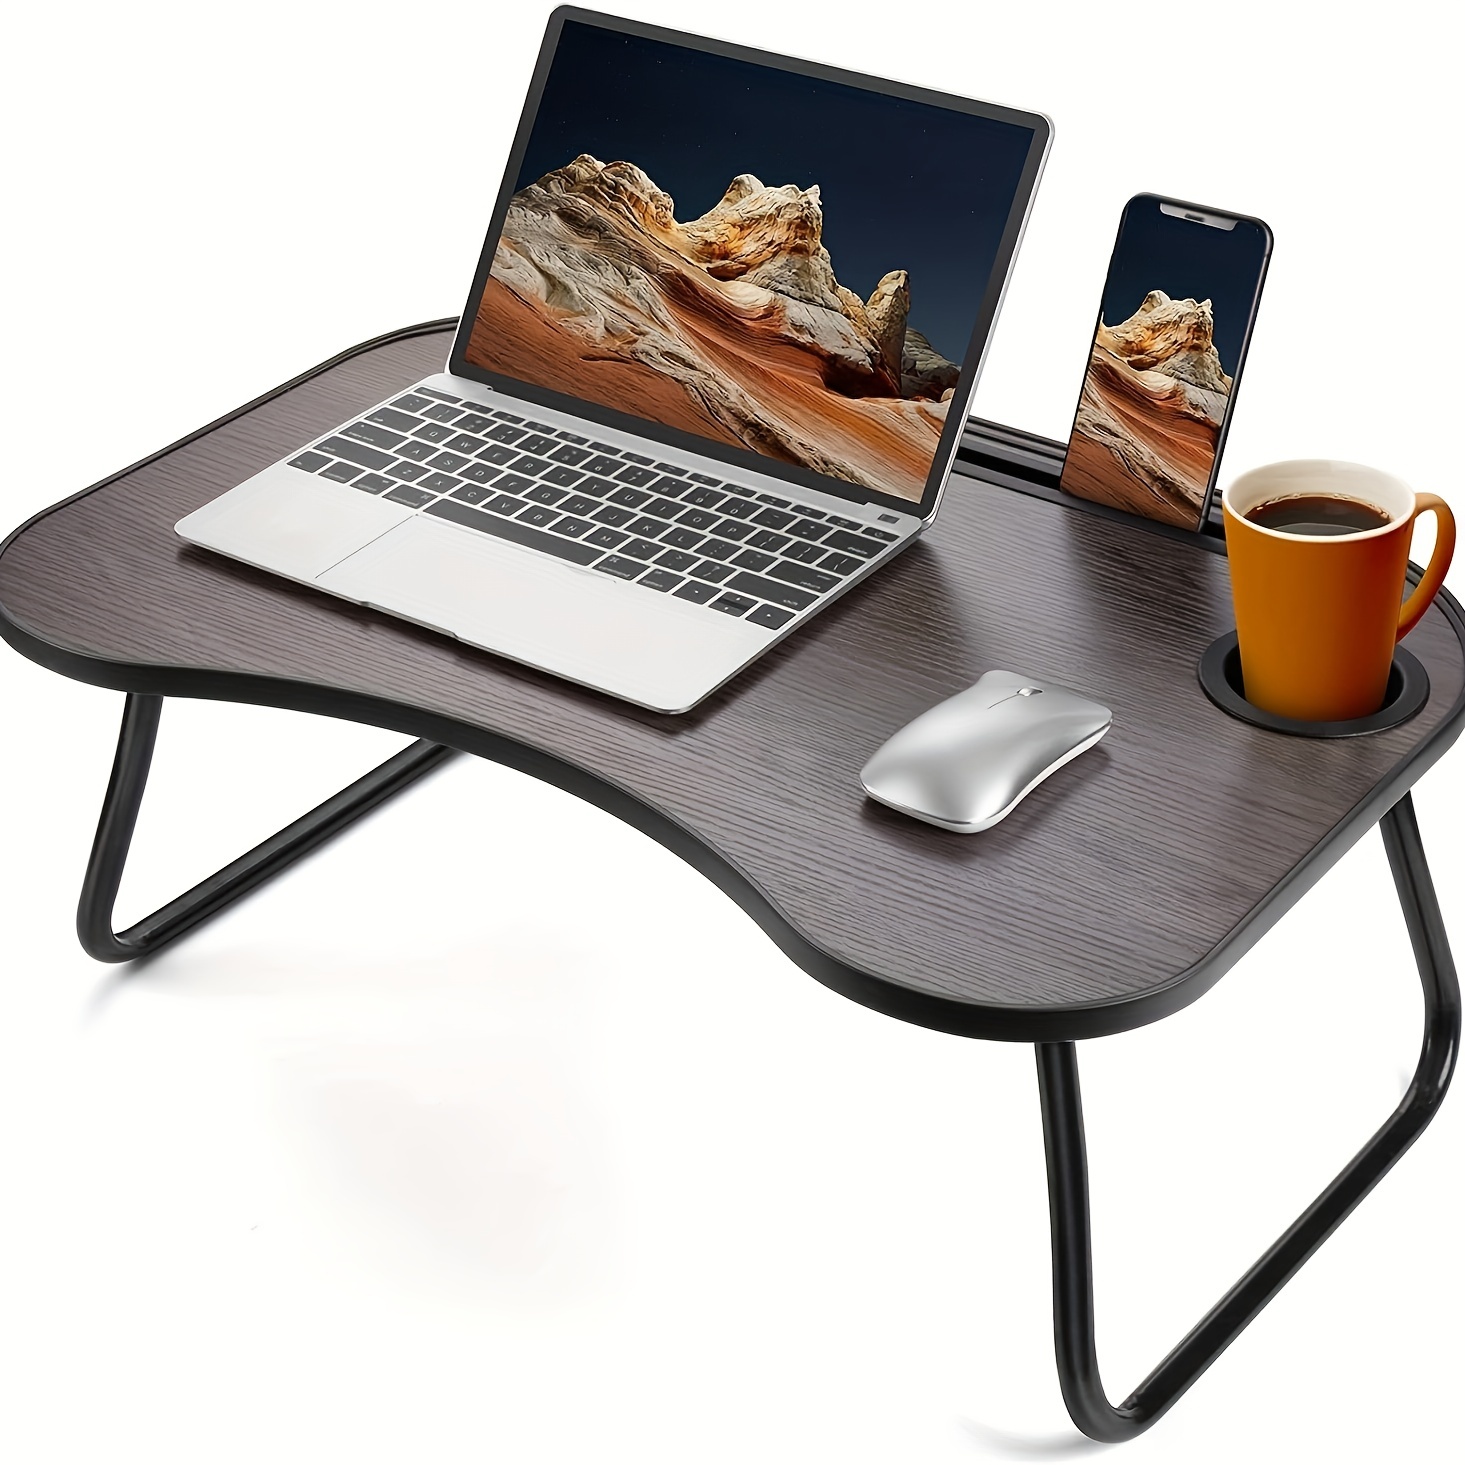 Adjustable Height Laptop Desk Laptop Stand for Bed Portable Lap Desk  Foldable Table Workstation Notebook RiserErgonomic Computer Tray Reading  Holder